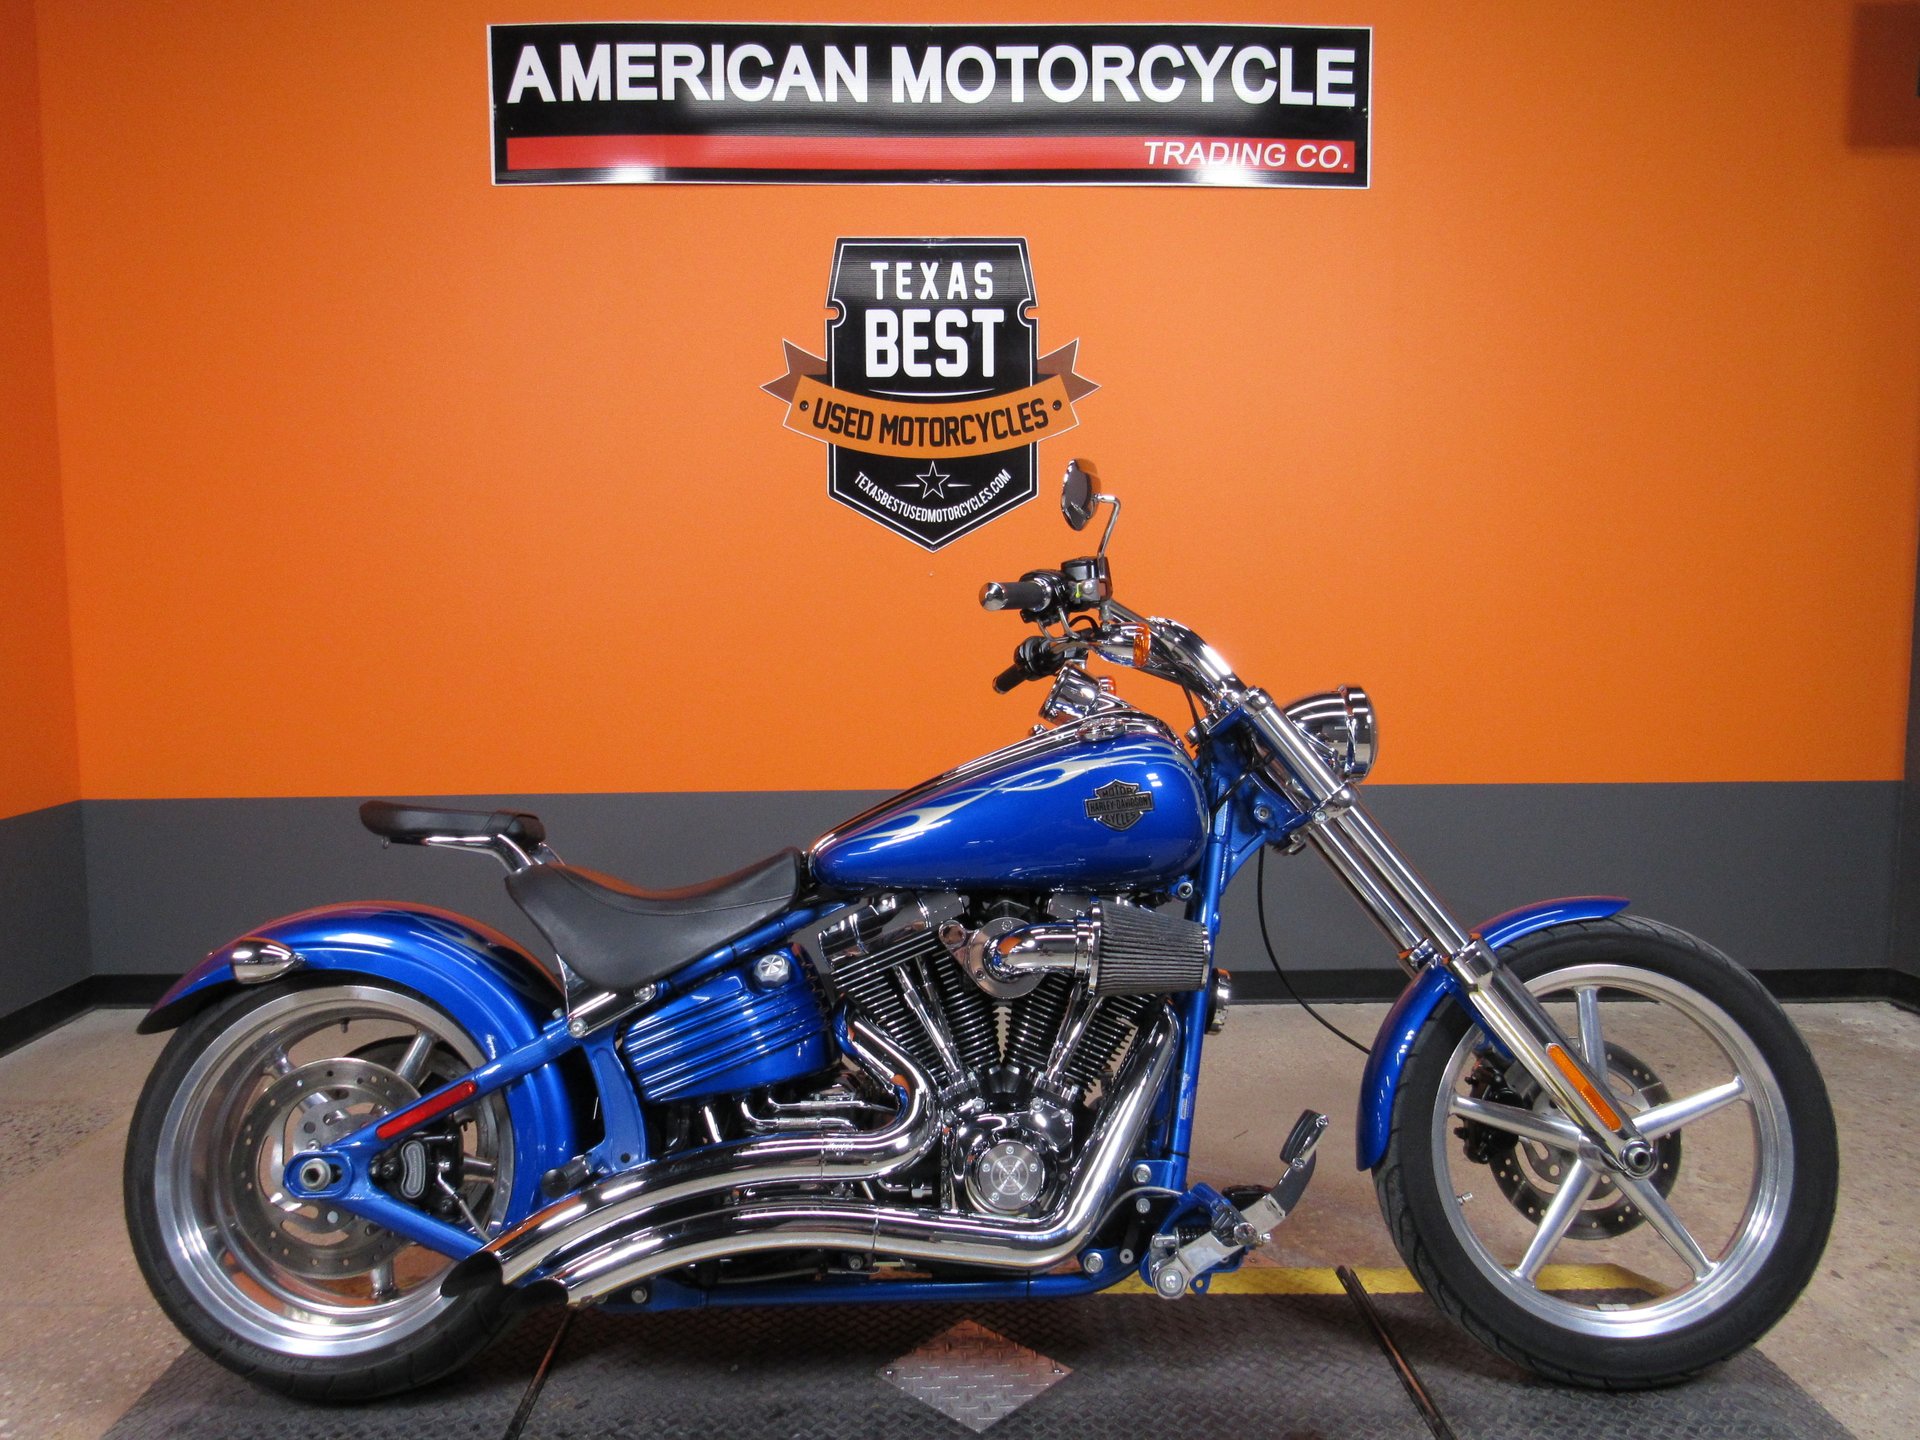 2008 Harley-Davidson Softail Rocker | American Motorcycle Trading Company -  Used Harley Davidson Motorcycles